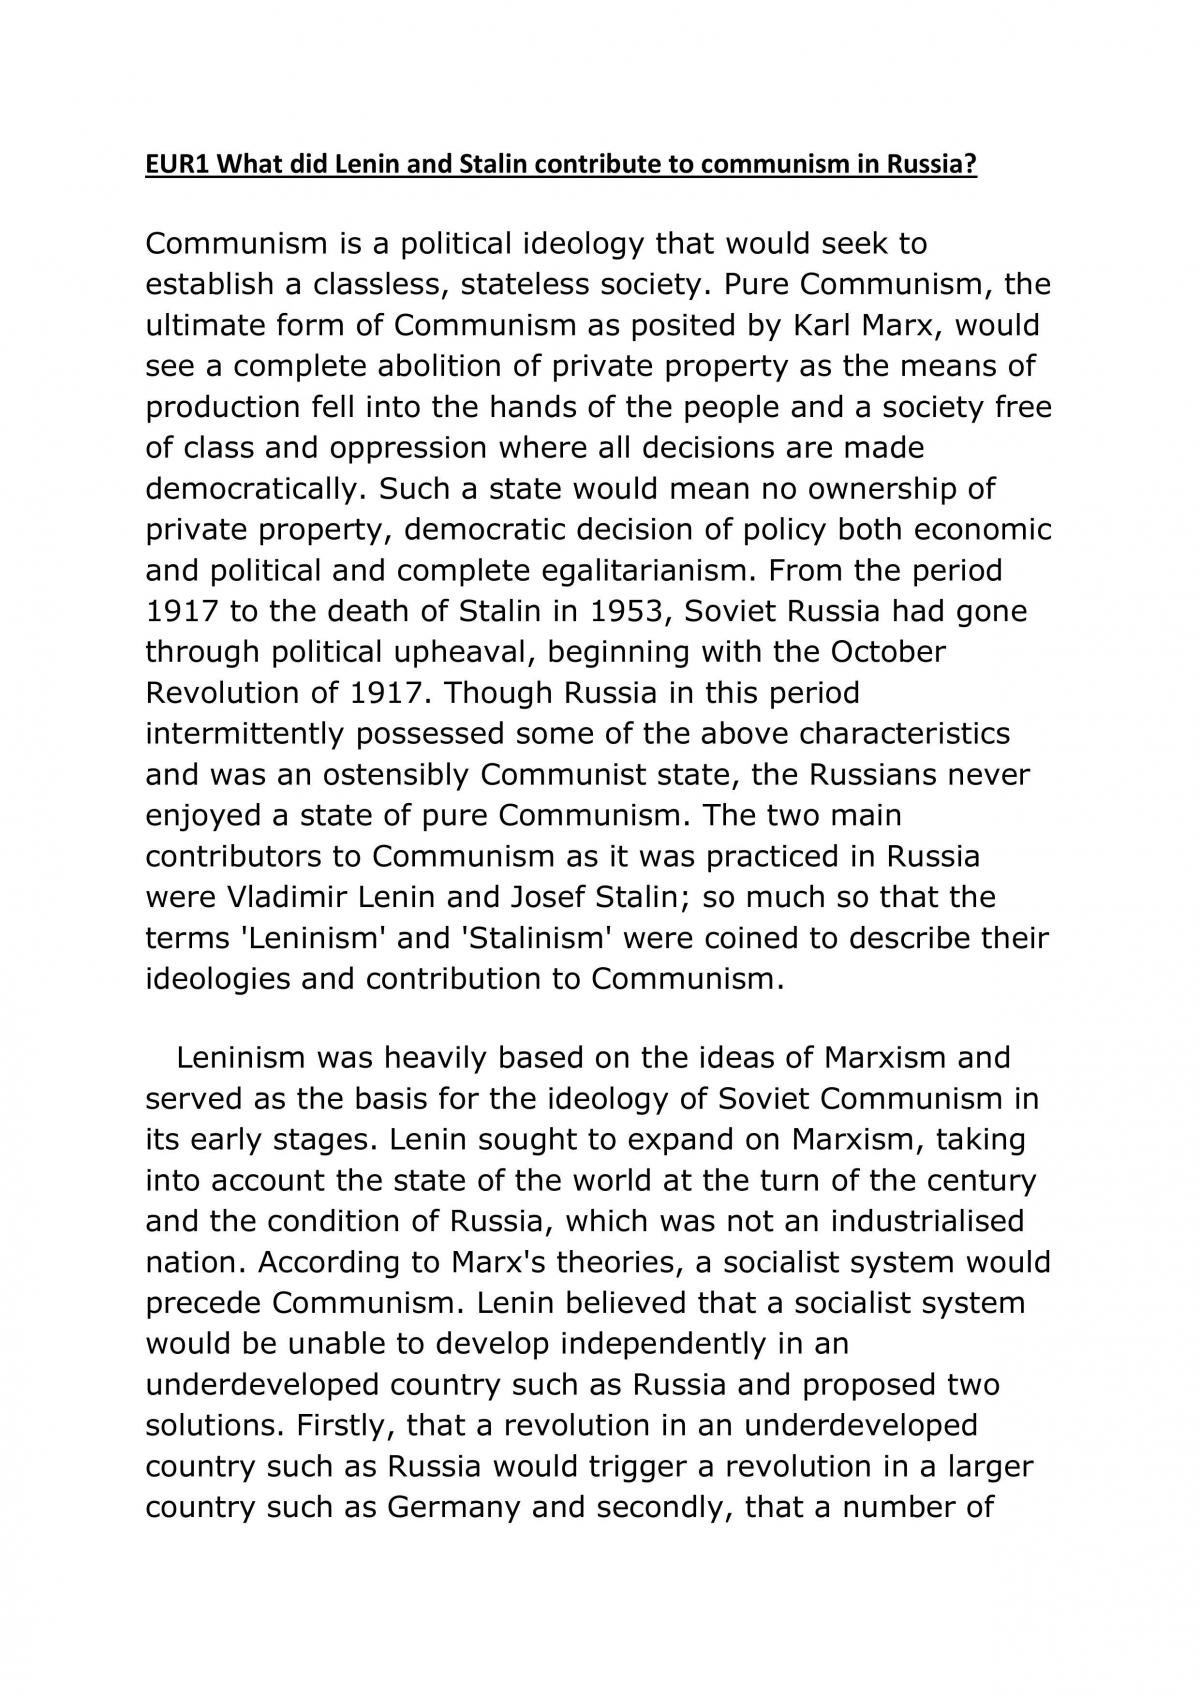 communism in russia 1900 to 1940 essay download